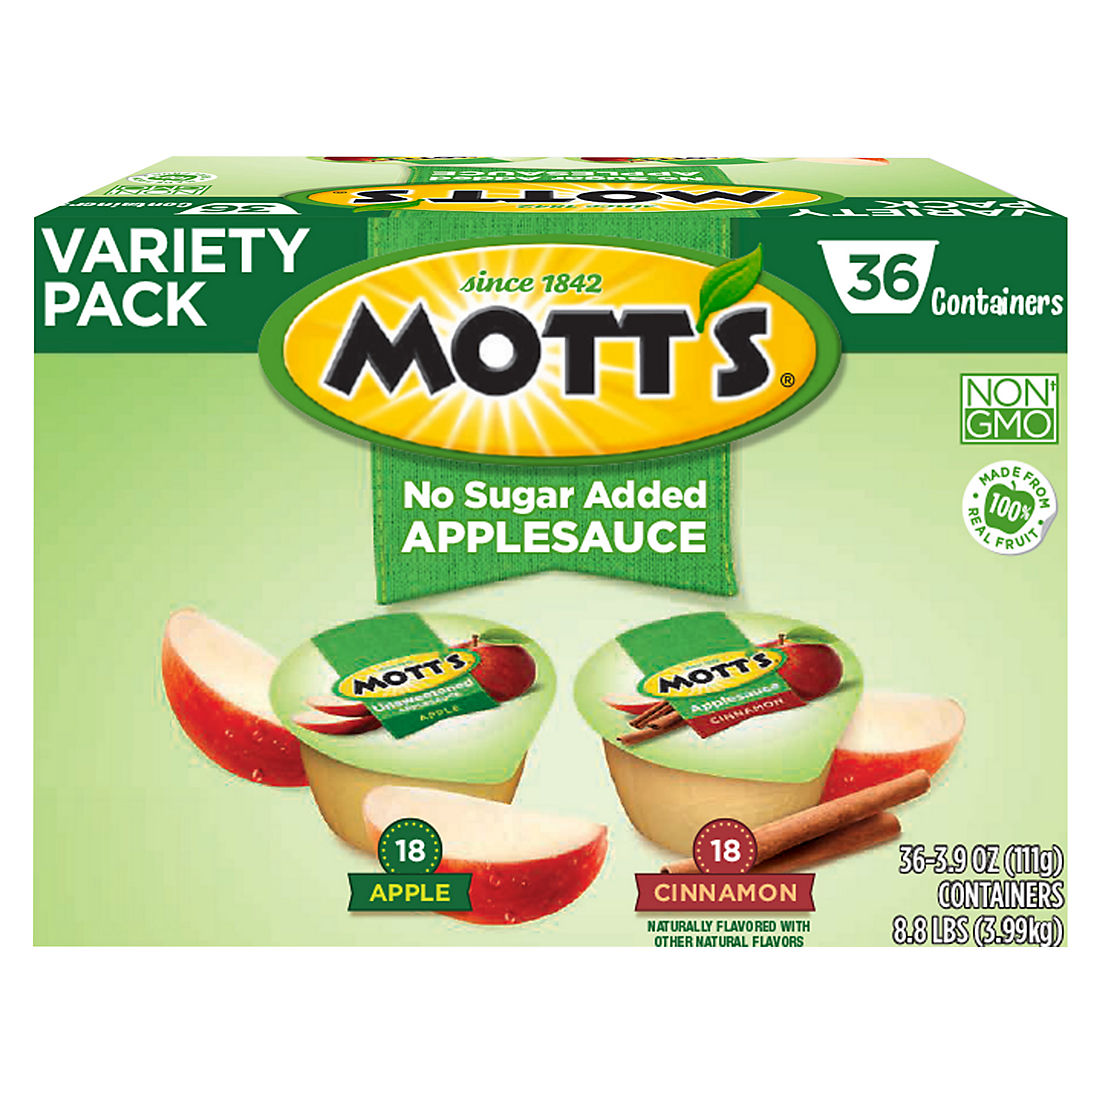 Mott's Applesauce No Sugar Added Variety Pack, 36 ct.